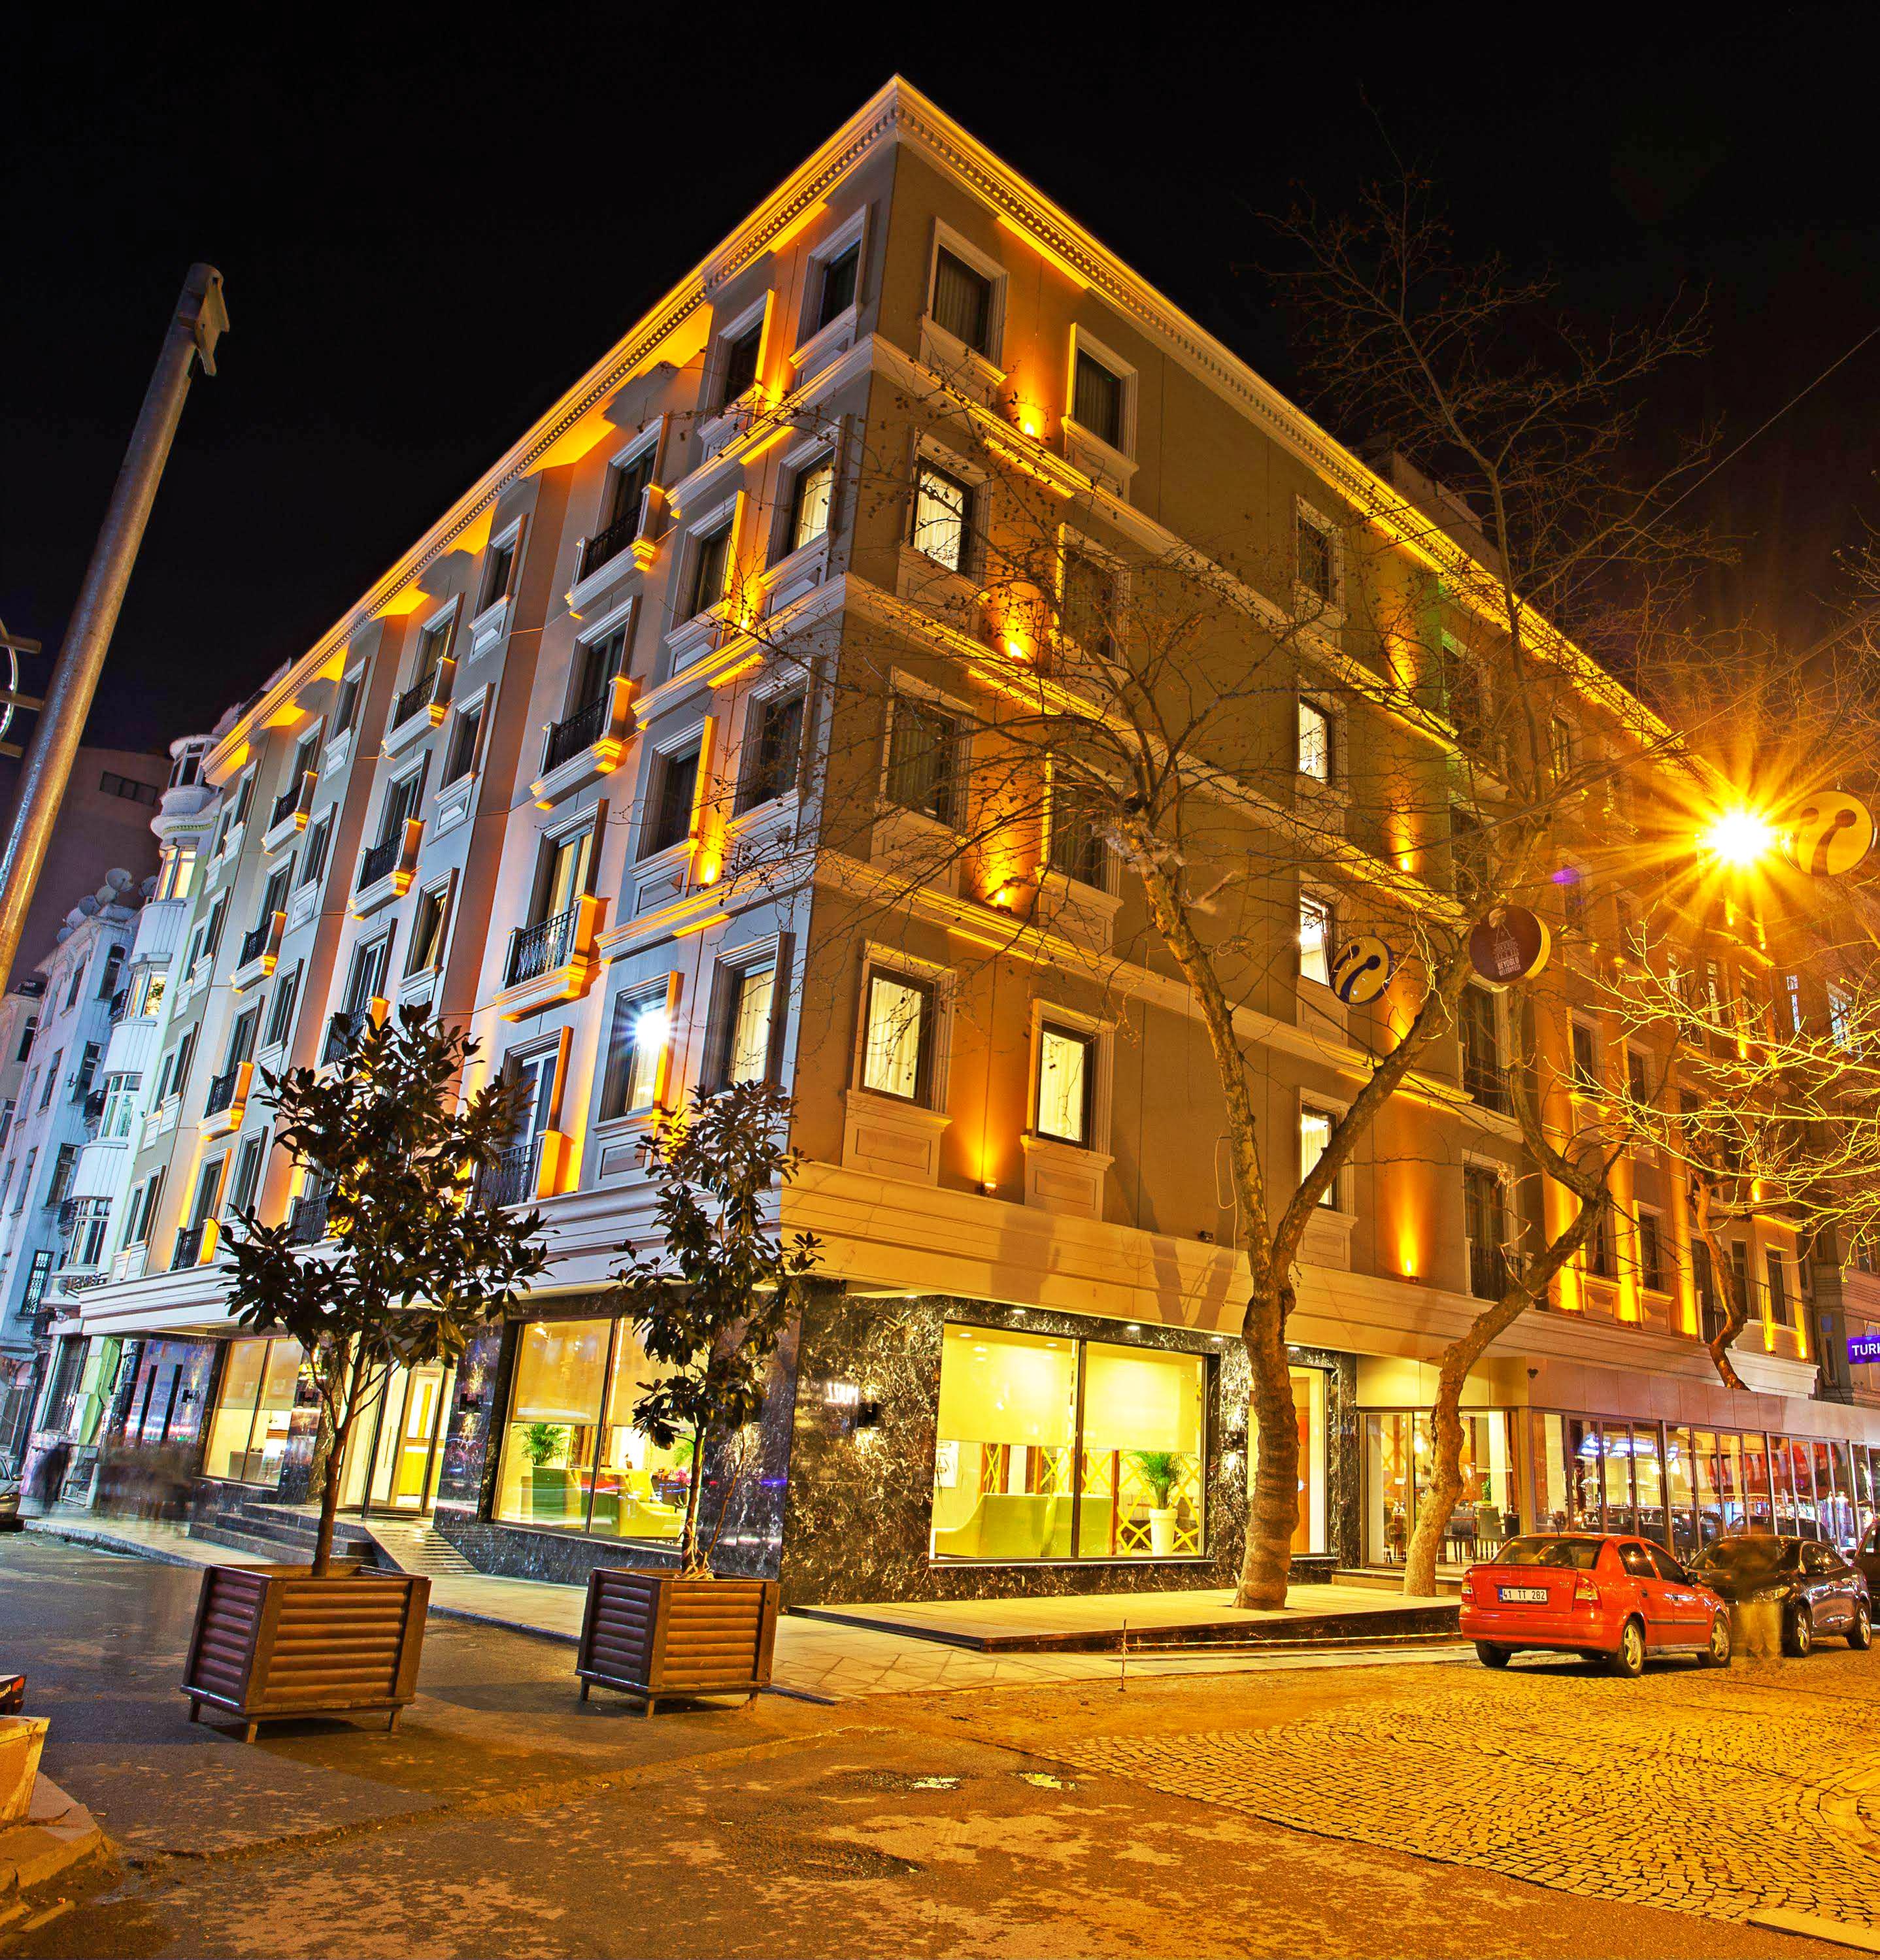 The Parma Hotel Taksim